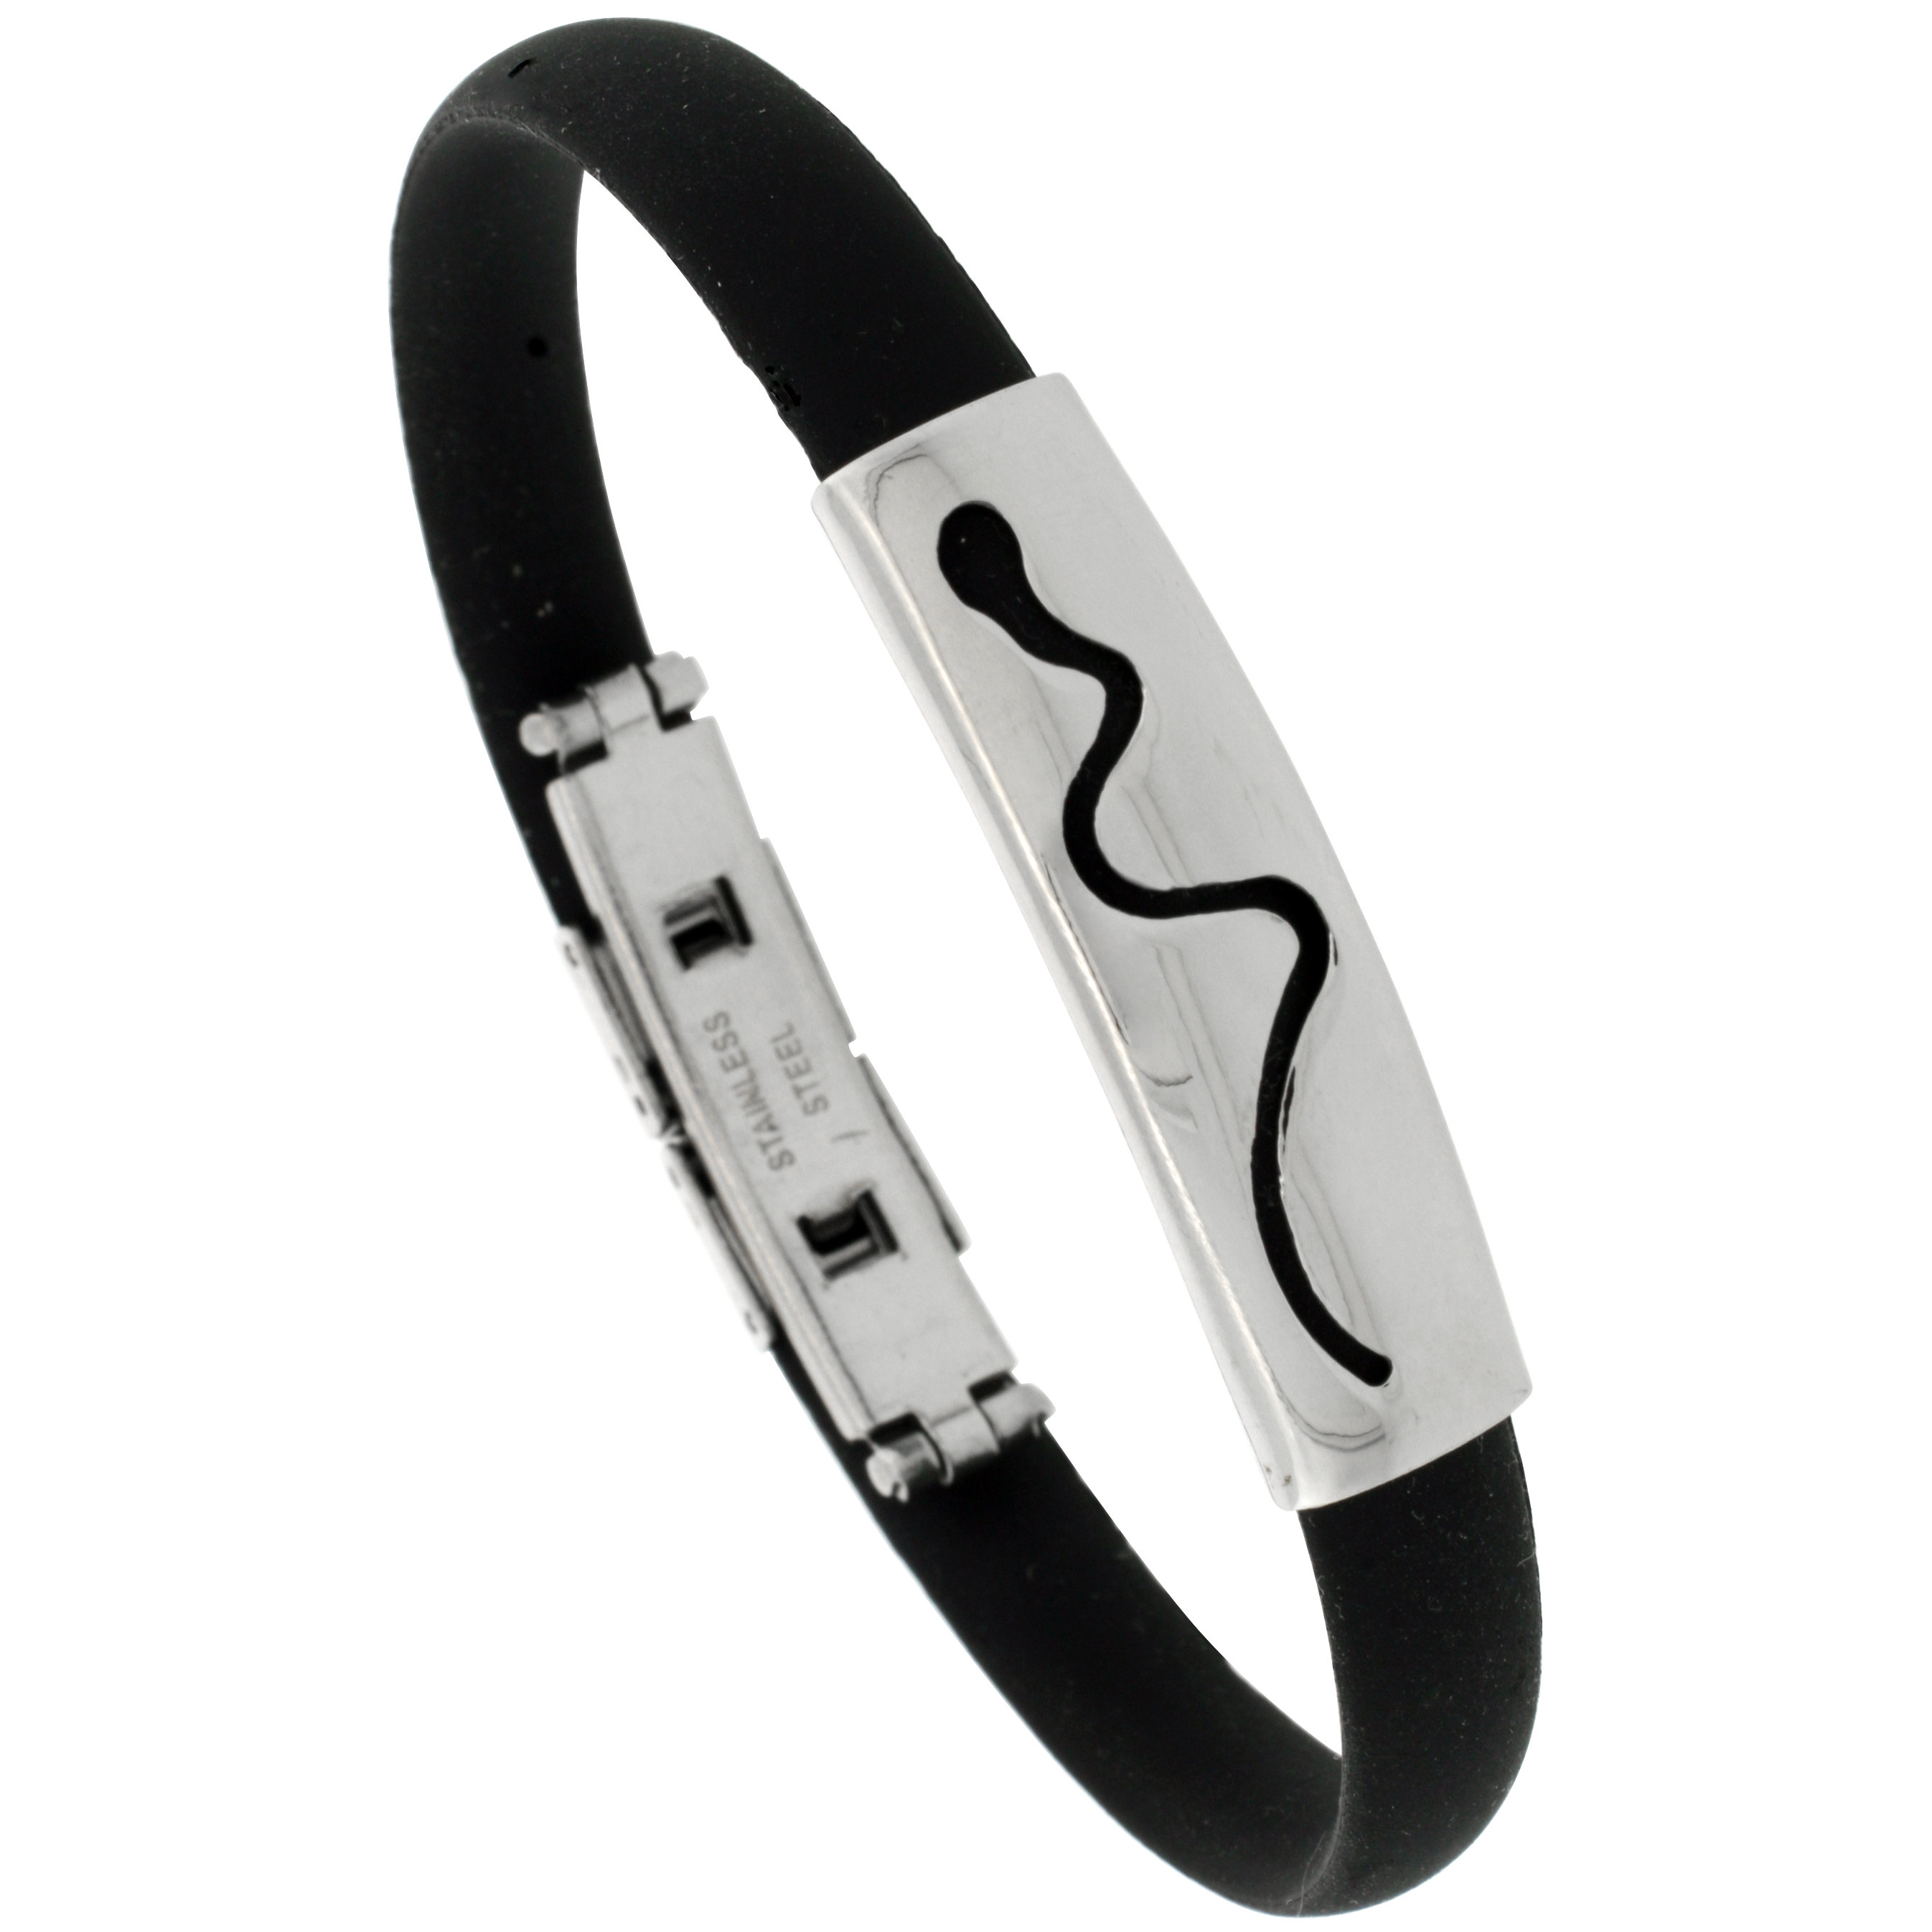 Stainless Steel Snake Bracelet For Men Black Rubber Accent, 3/8 inch wide, 8 inch long